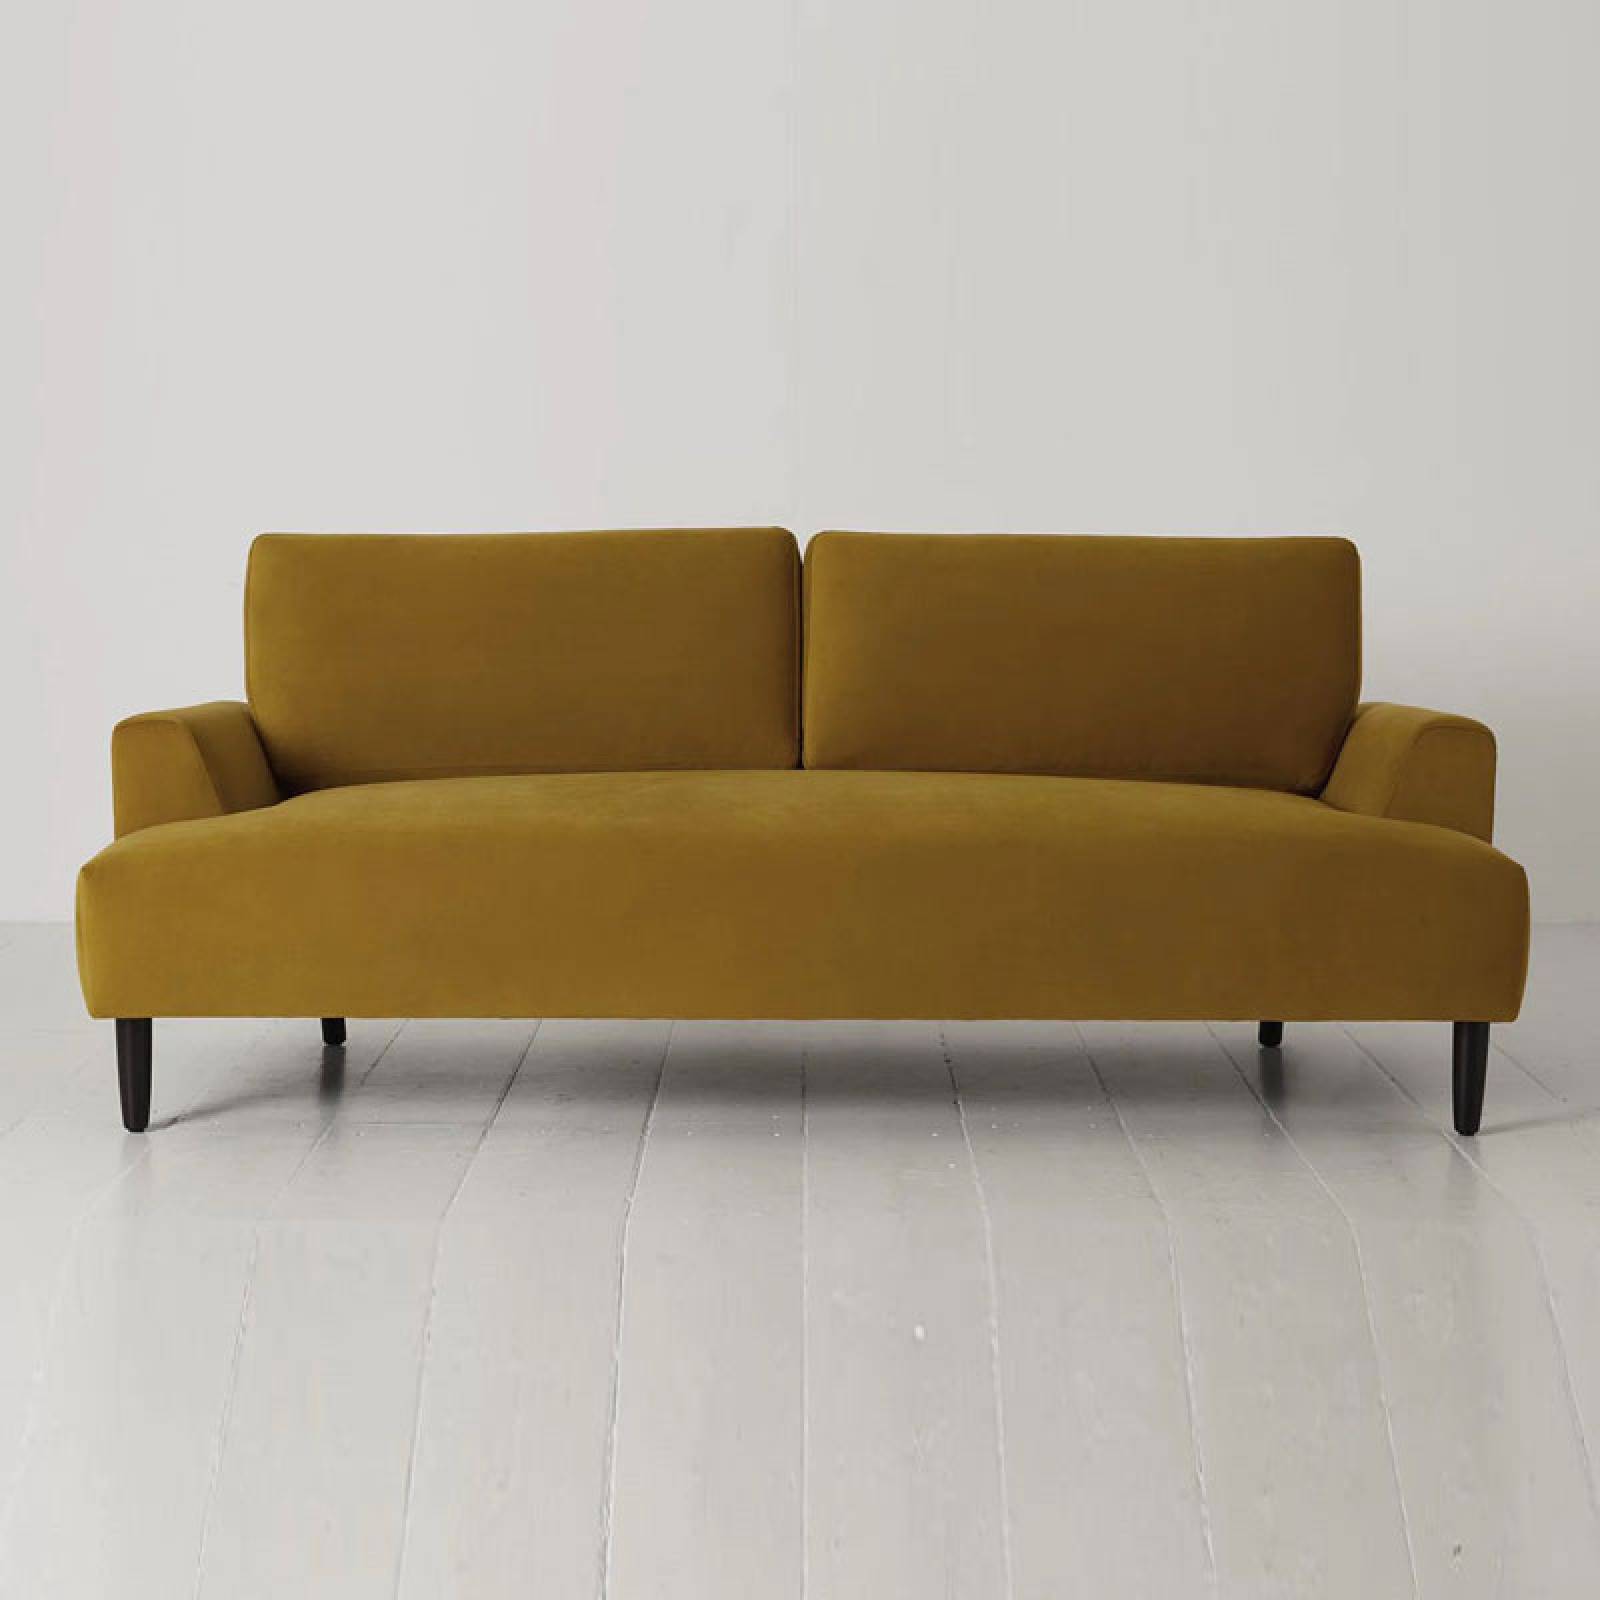 Swyft - Model 05 - 3 Seater Sofa